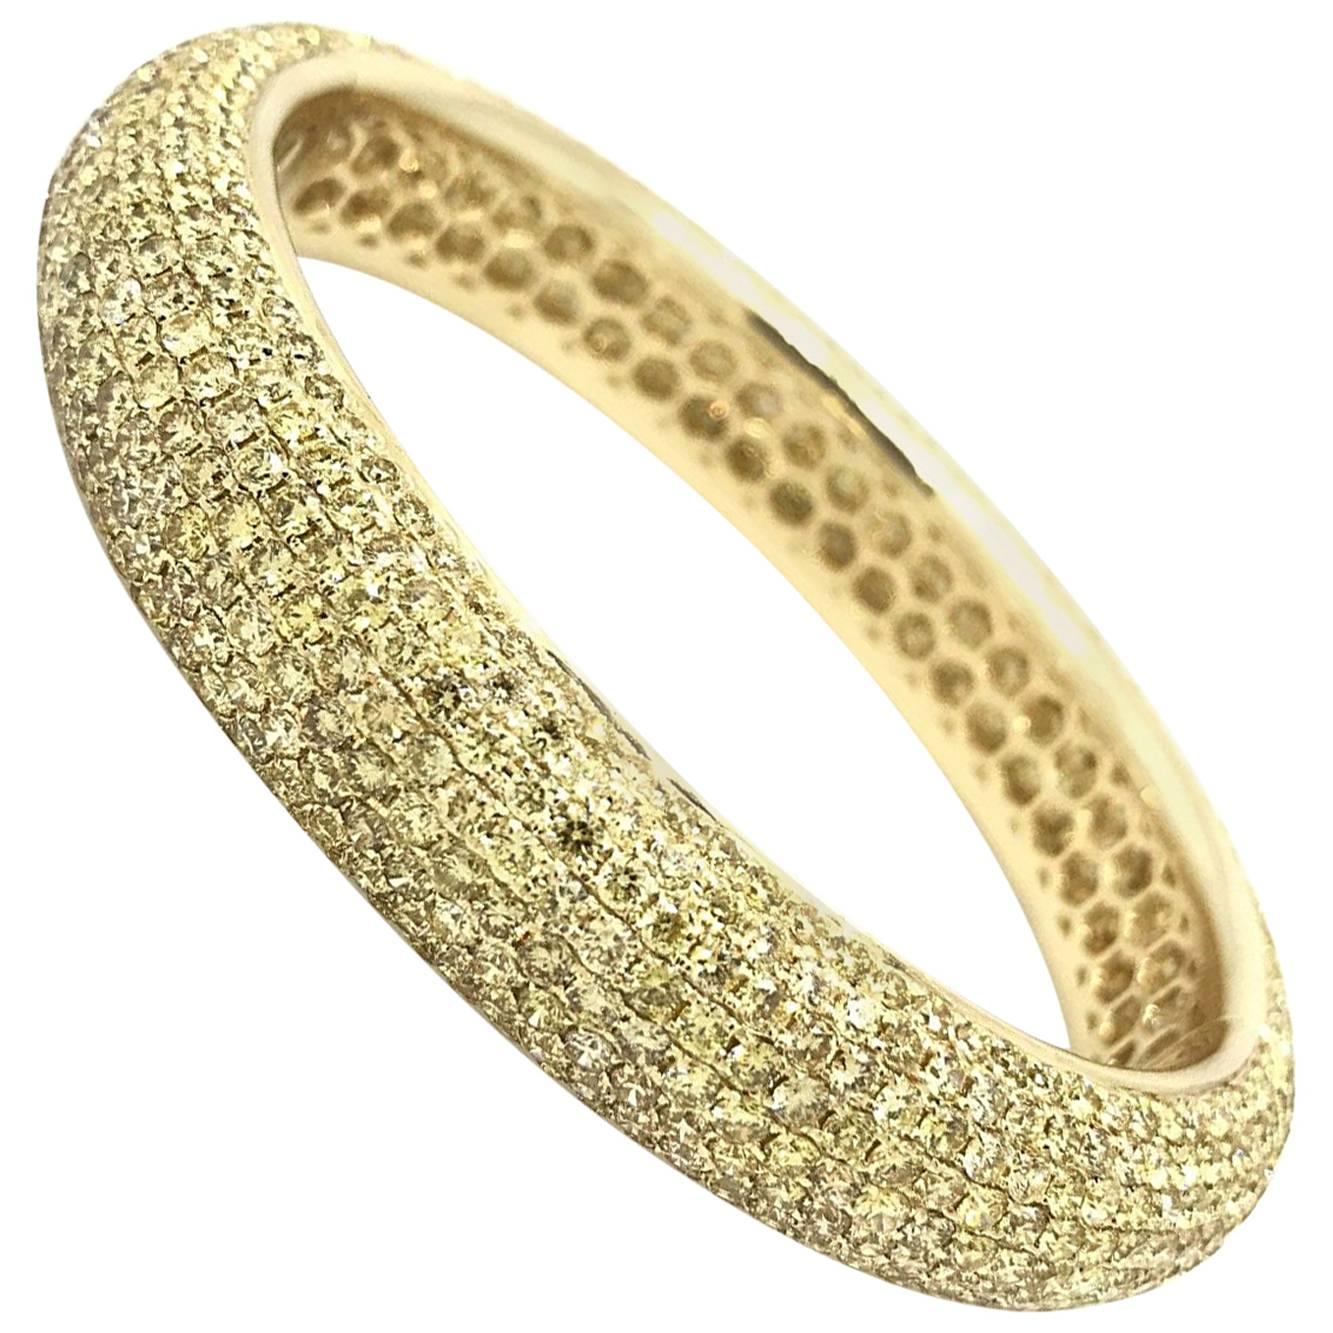 Wide Yellow Diamond Pave Bangle Bracelet with 24.36 Carat in 18 Karat Gold